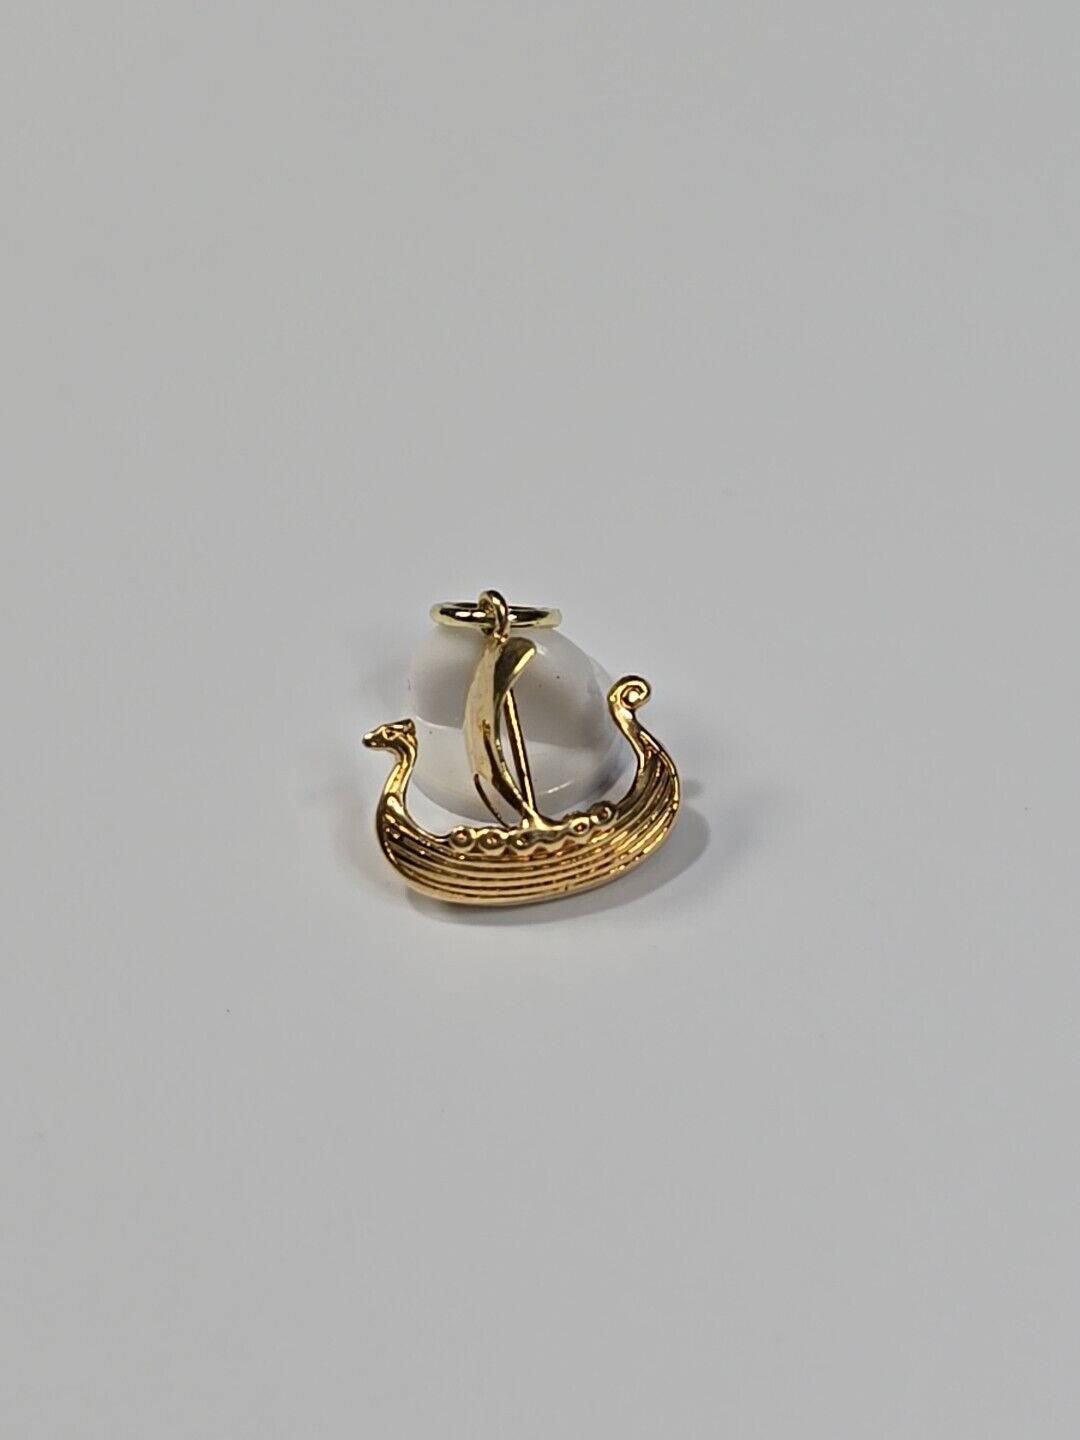 Viking Sailing Ship Charm Pendant Gold Color Metal Vintage Small Size 